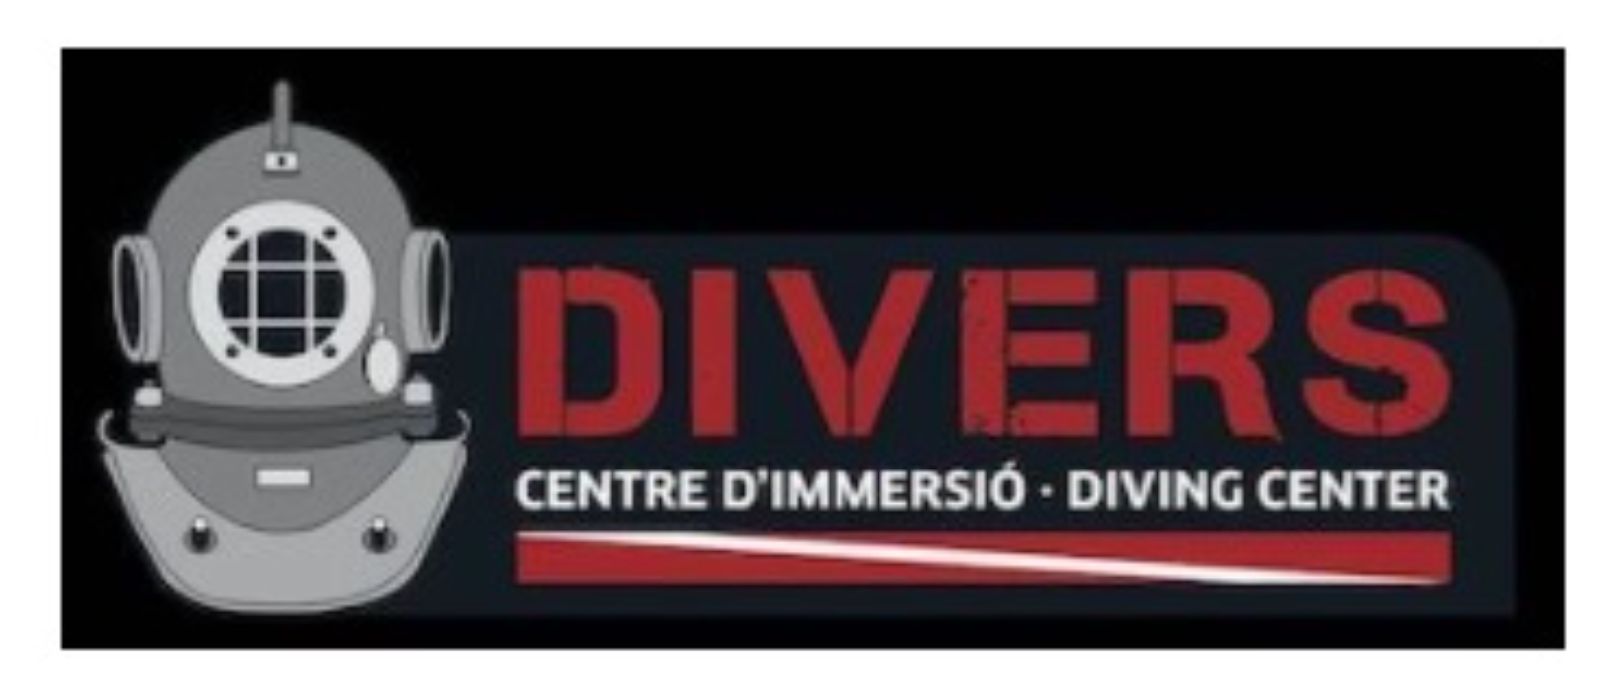 Diving with Divers Centre d'immersió